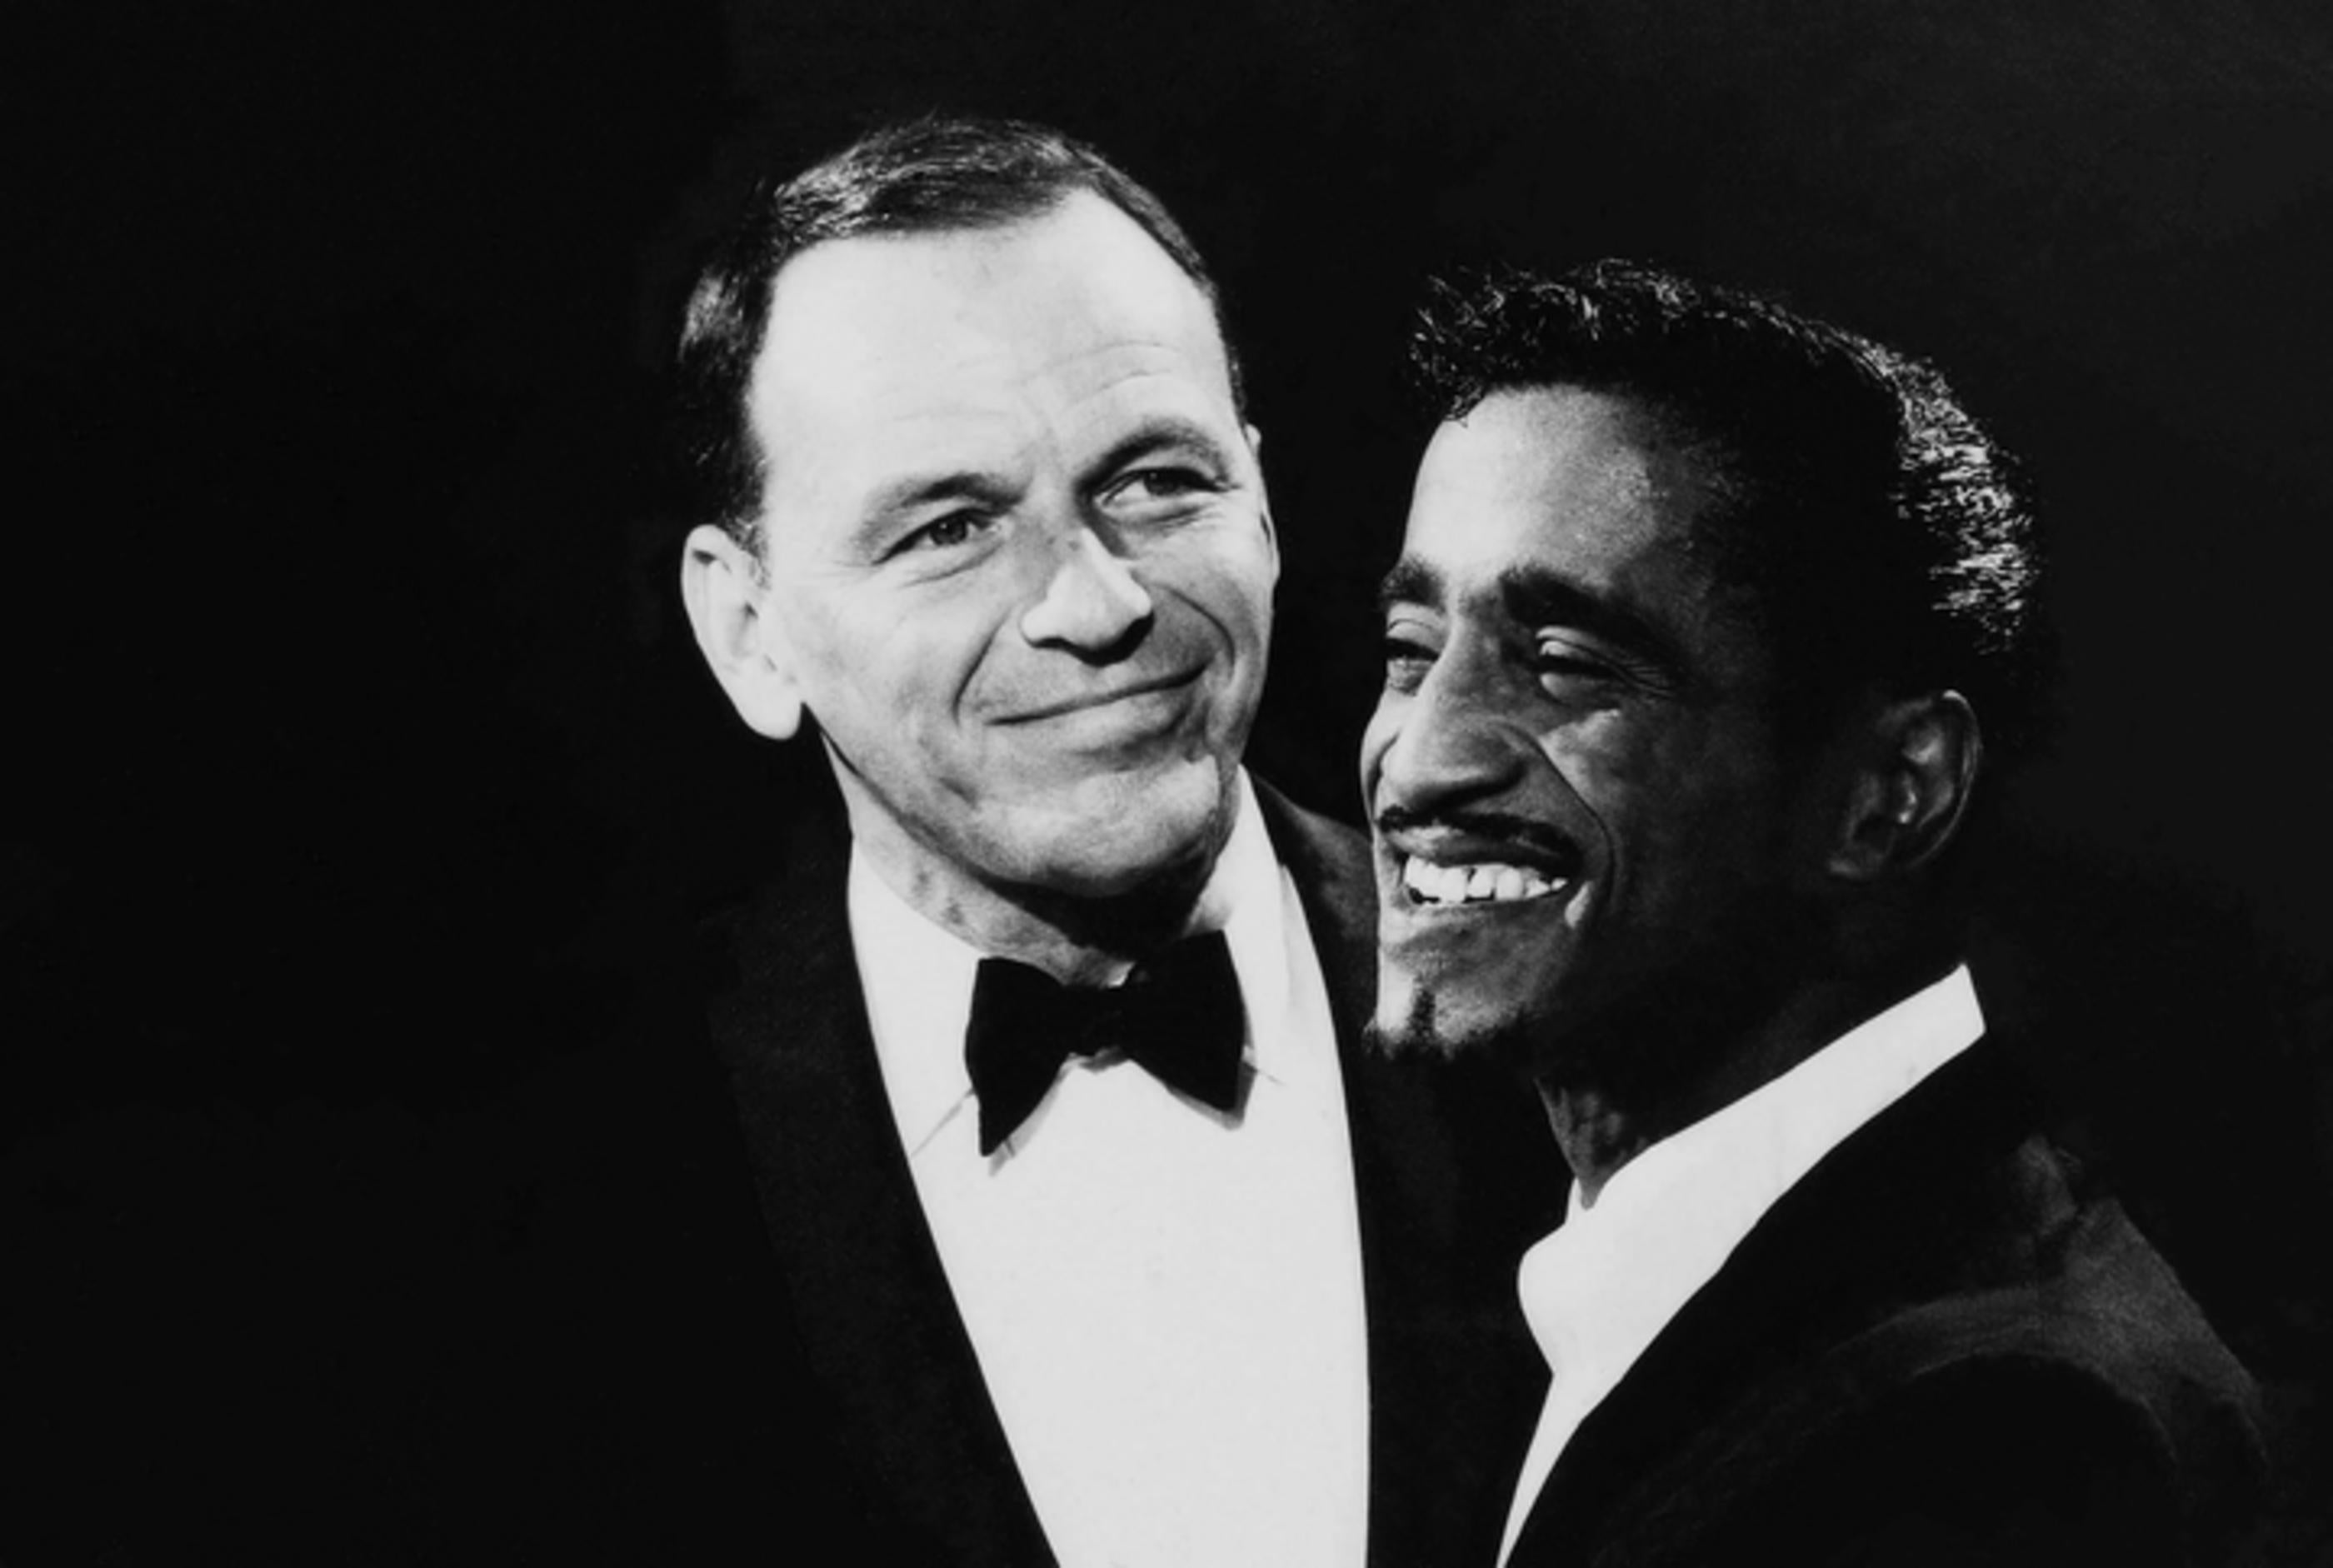 Frank Sinatra and Sammy Davis Jr. Smiling